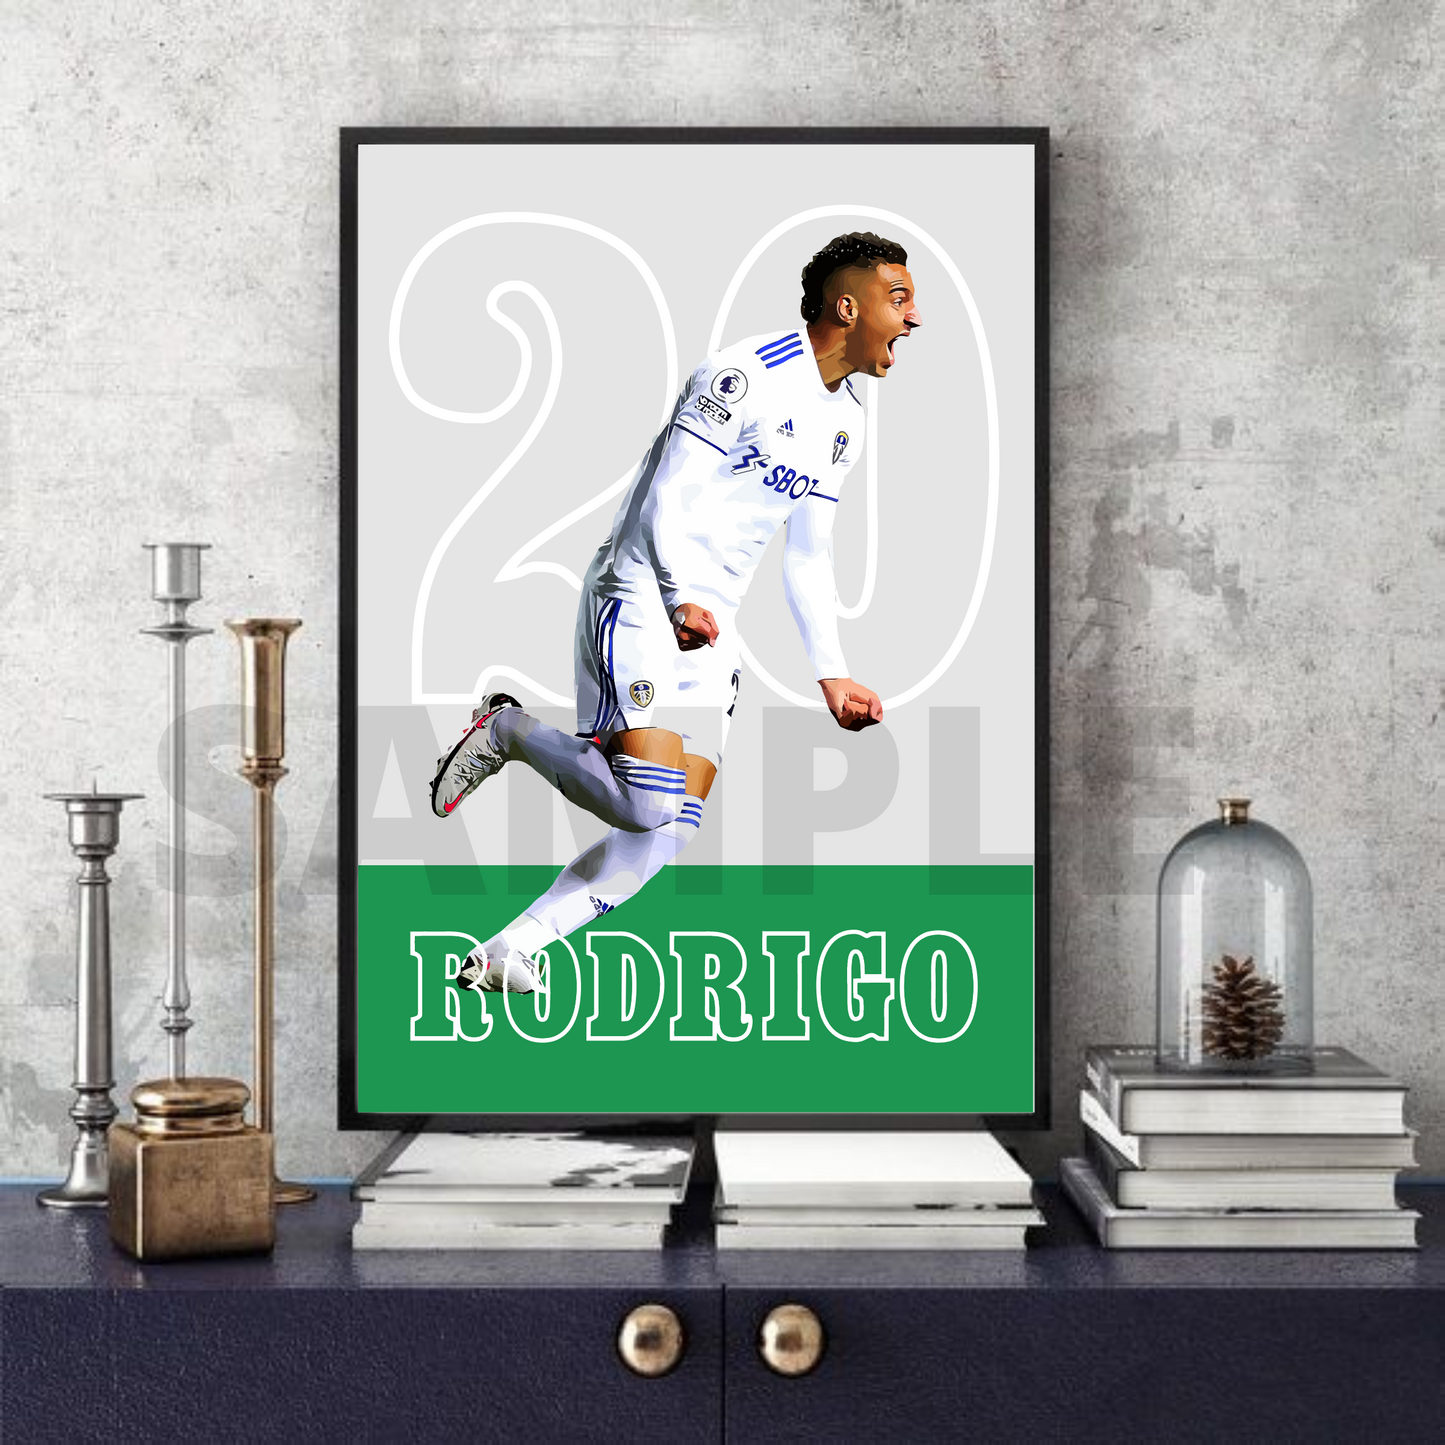 Rodrigo Moreno - Leeds United Football Memorabilia/Collectible/Print signed